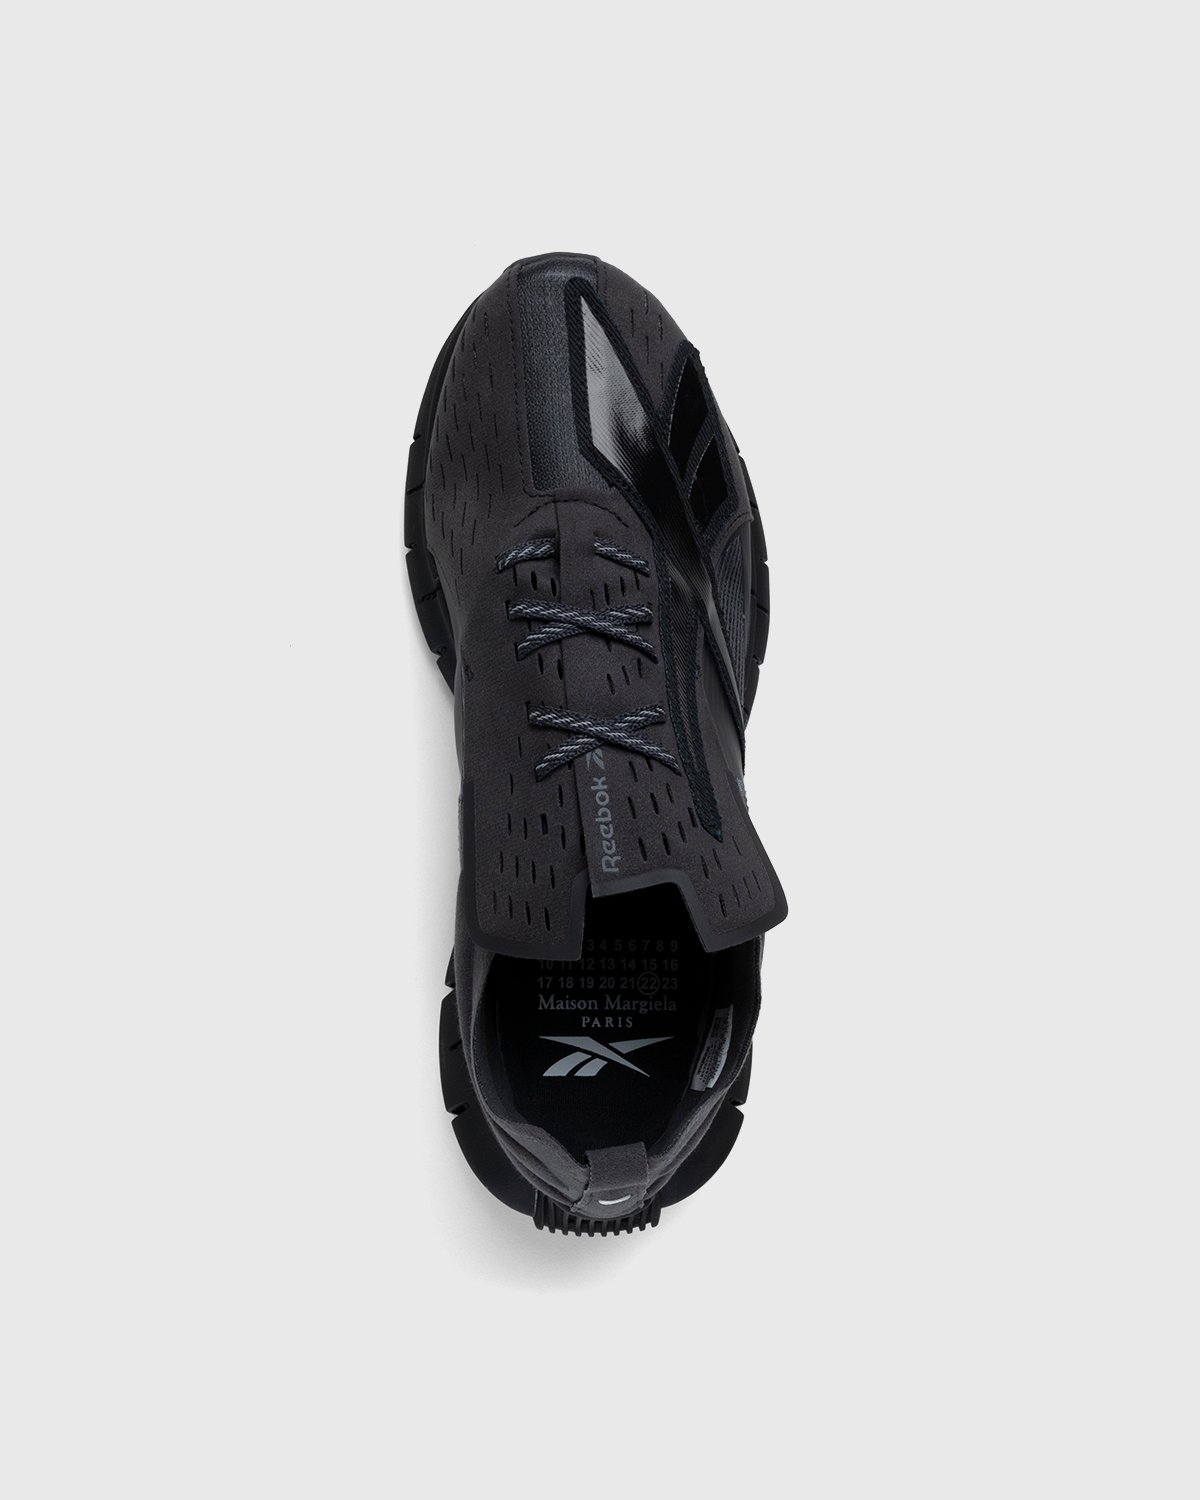 Reebok x Maison Margiela - Zig 3D Storm Memory Of Black - Footwear - Black - Image 5